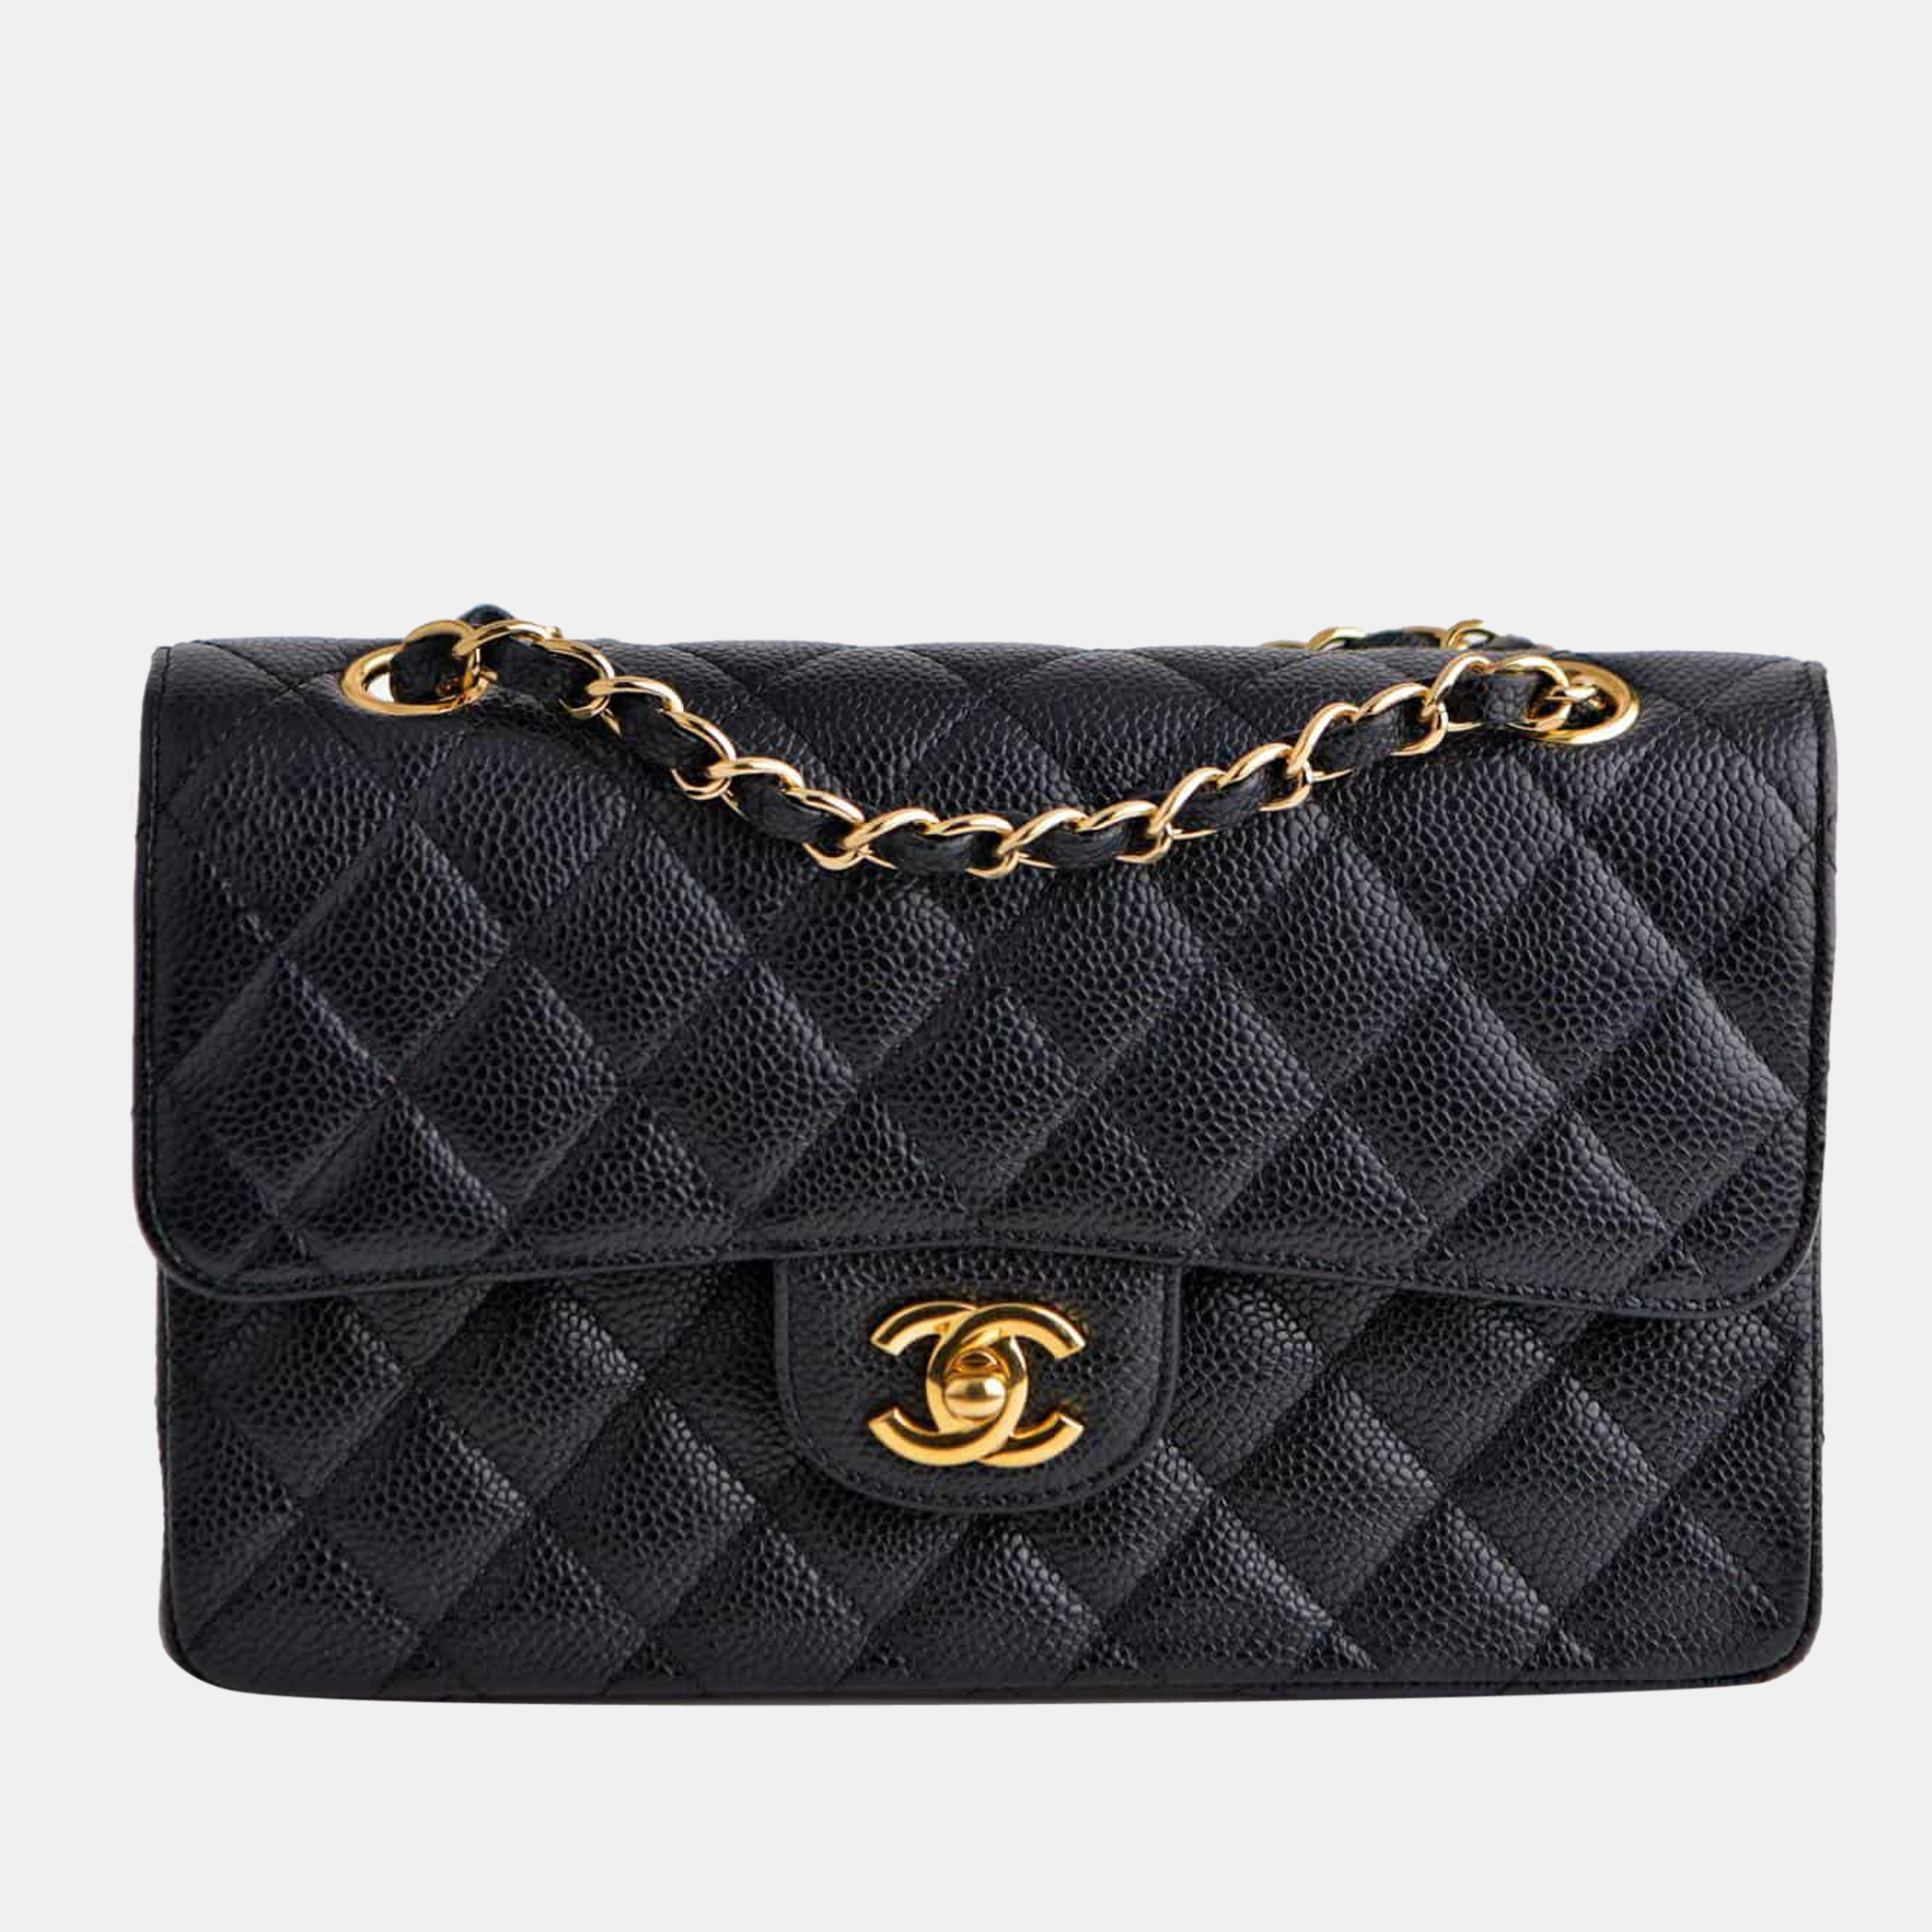 chanel small black leather purse handbag